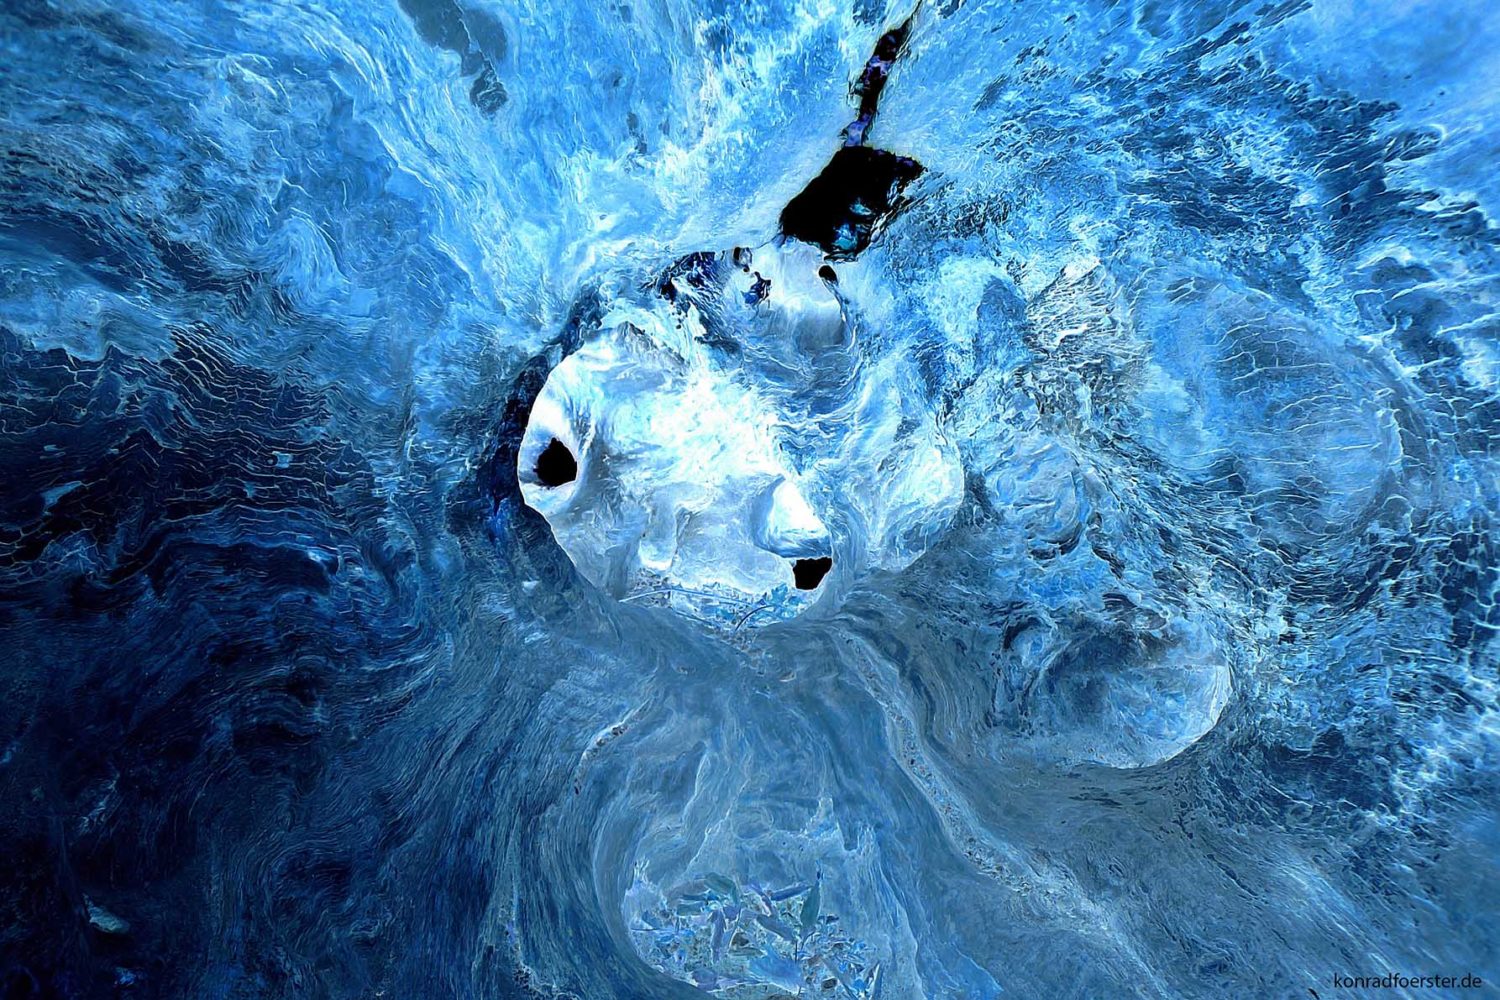 It looks like a pufferfish for me in a frosty blue ocean or sea.